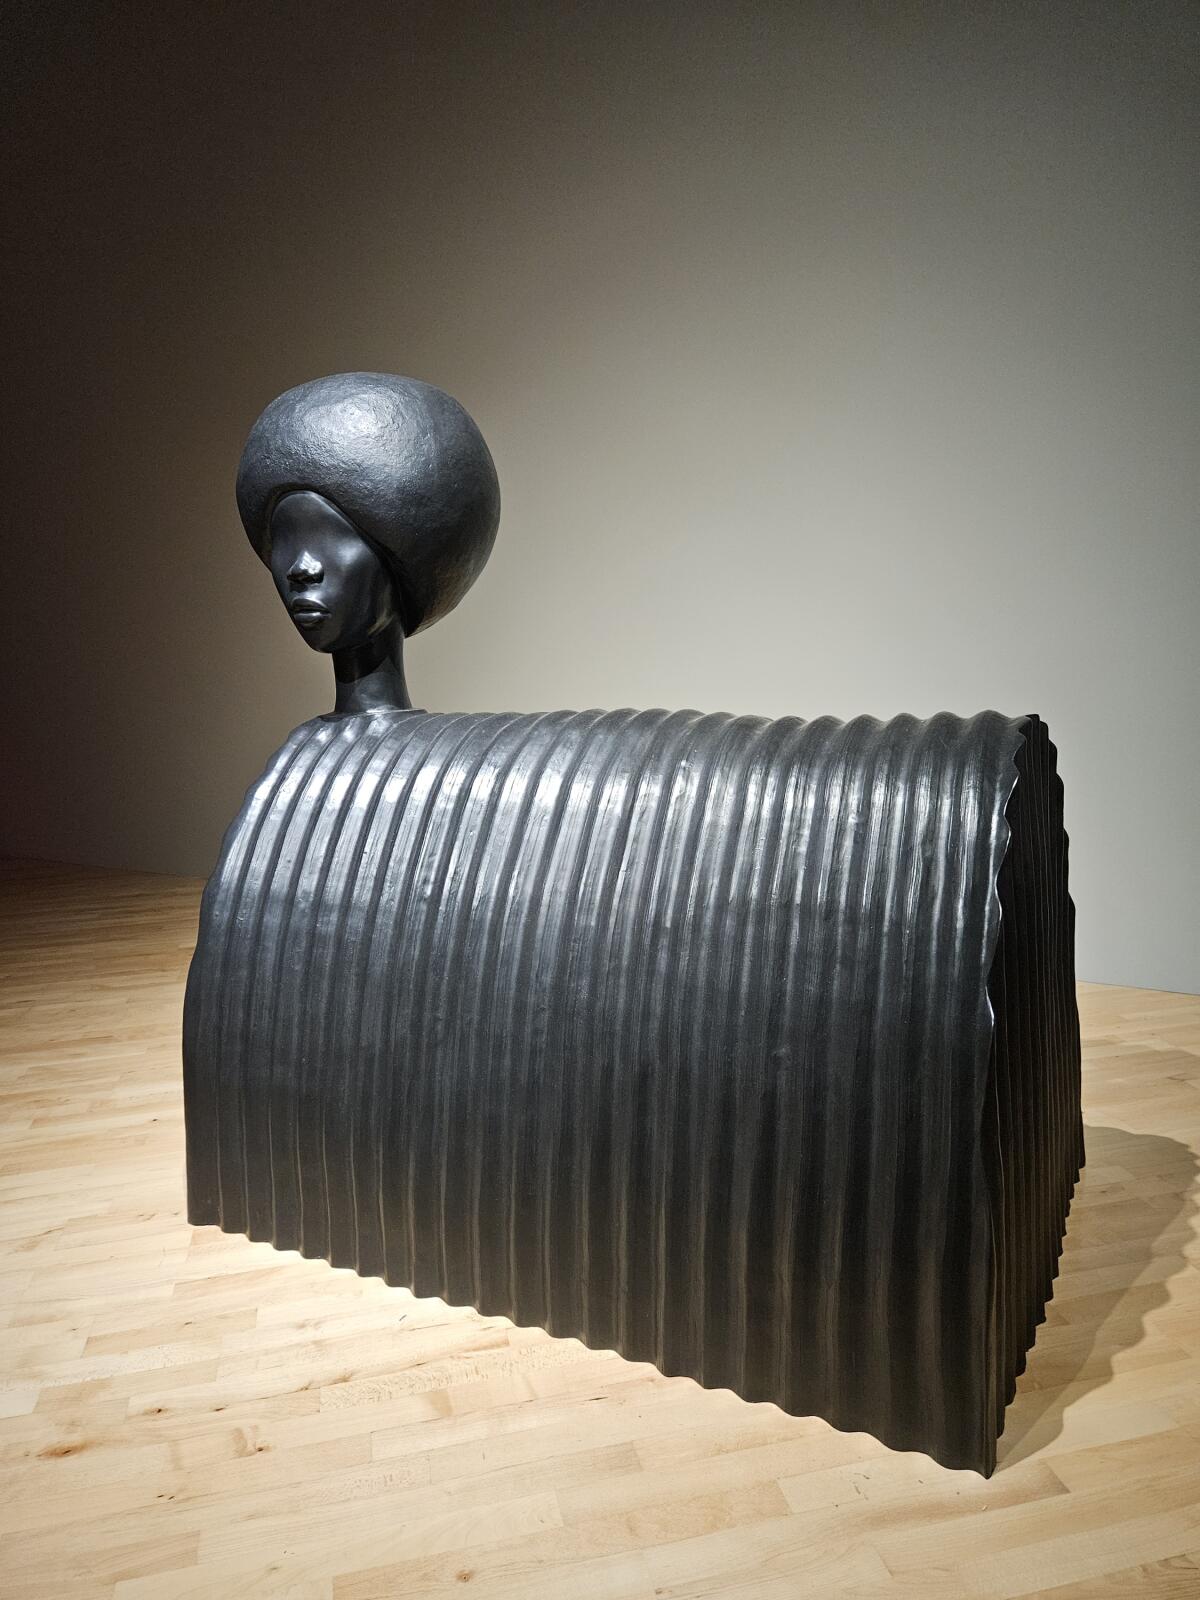 Simone Leigh, "Sentinel," 2019; bronze